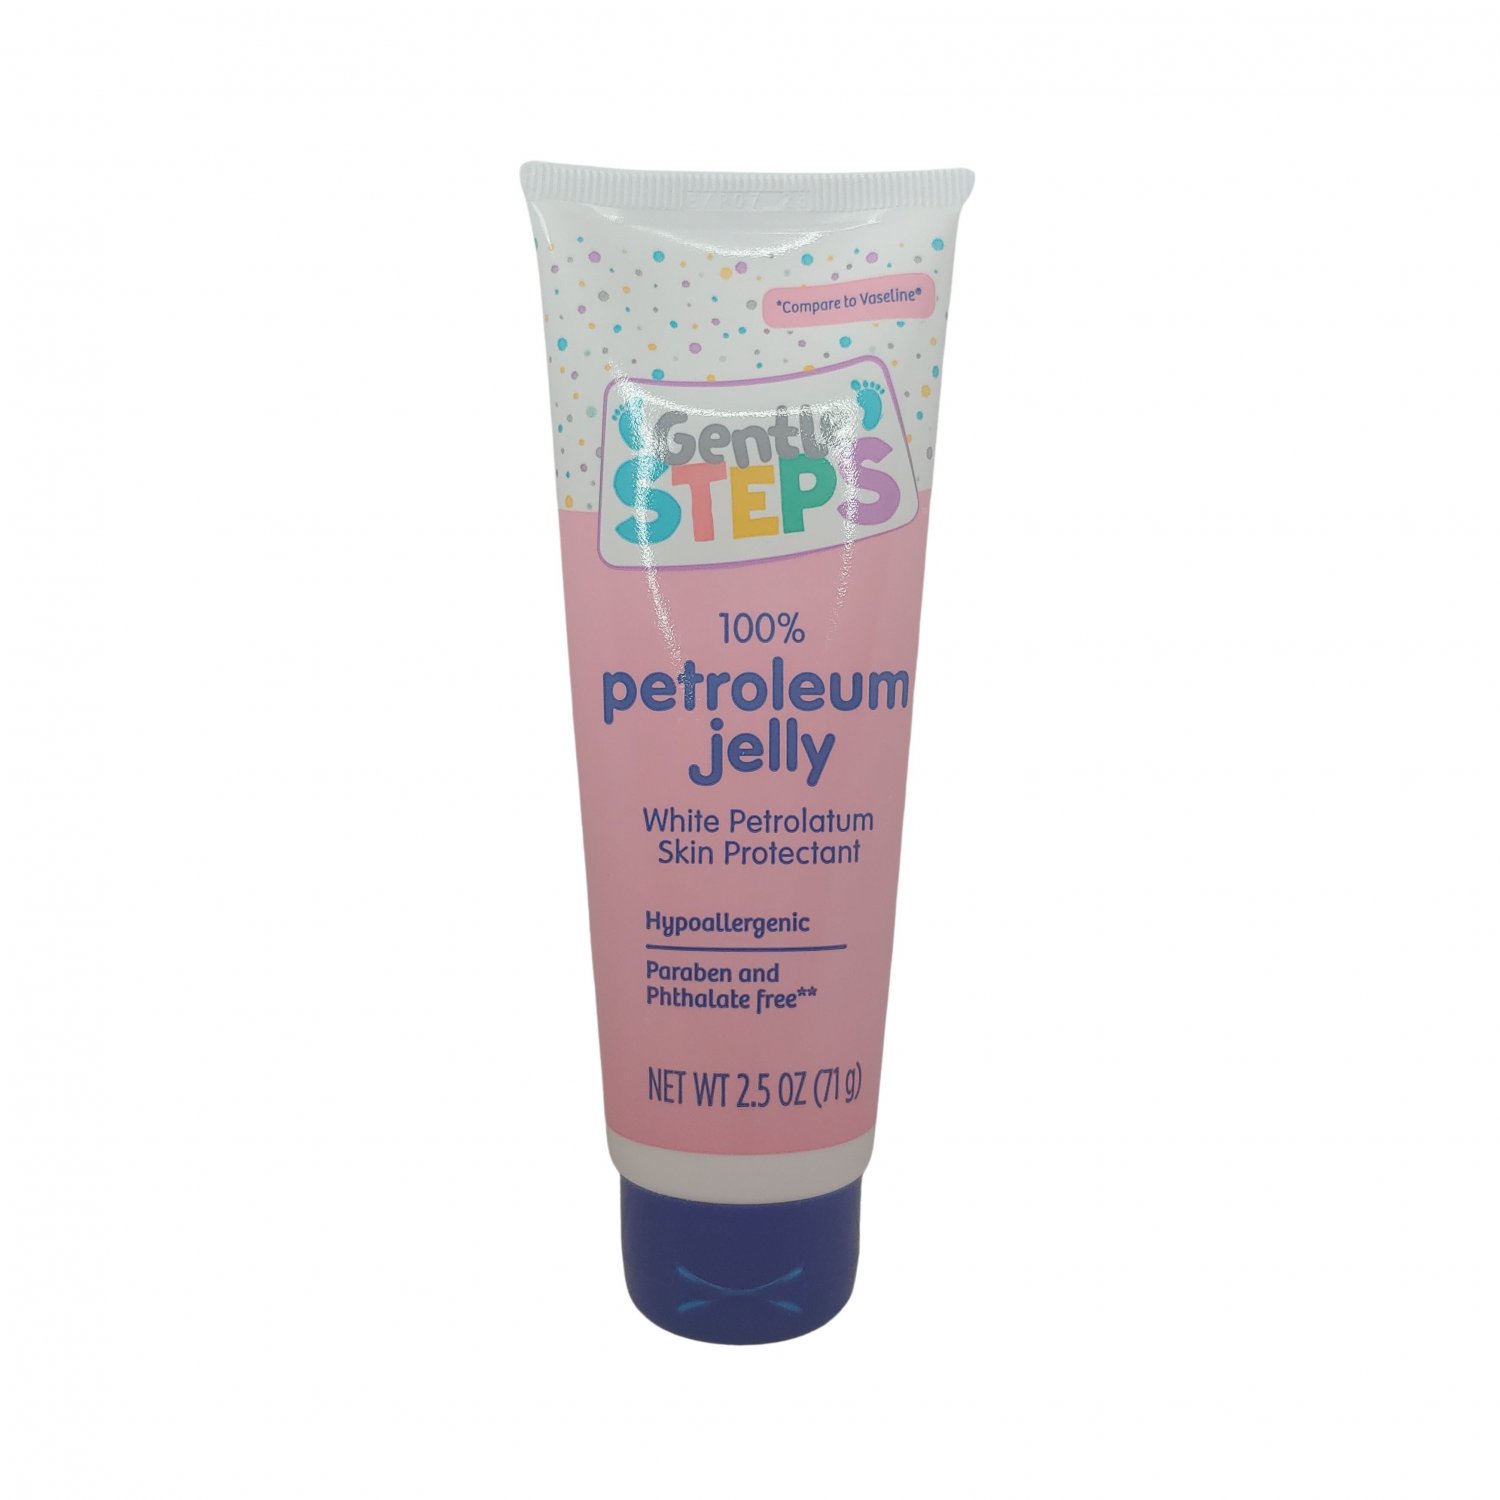 Gentle Steps 100% Petroleum Jelly Skin Protectant, 2.5 oz (71 g), EXP 08/2023